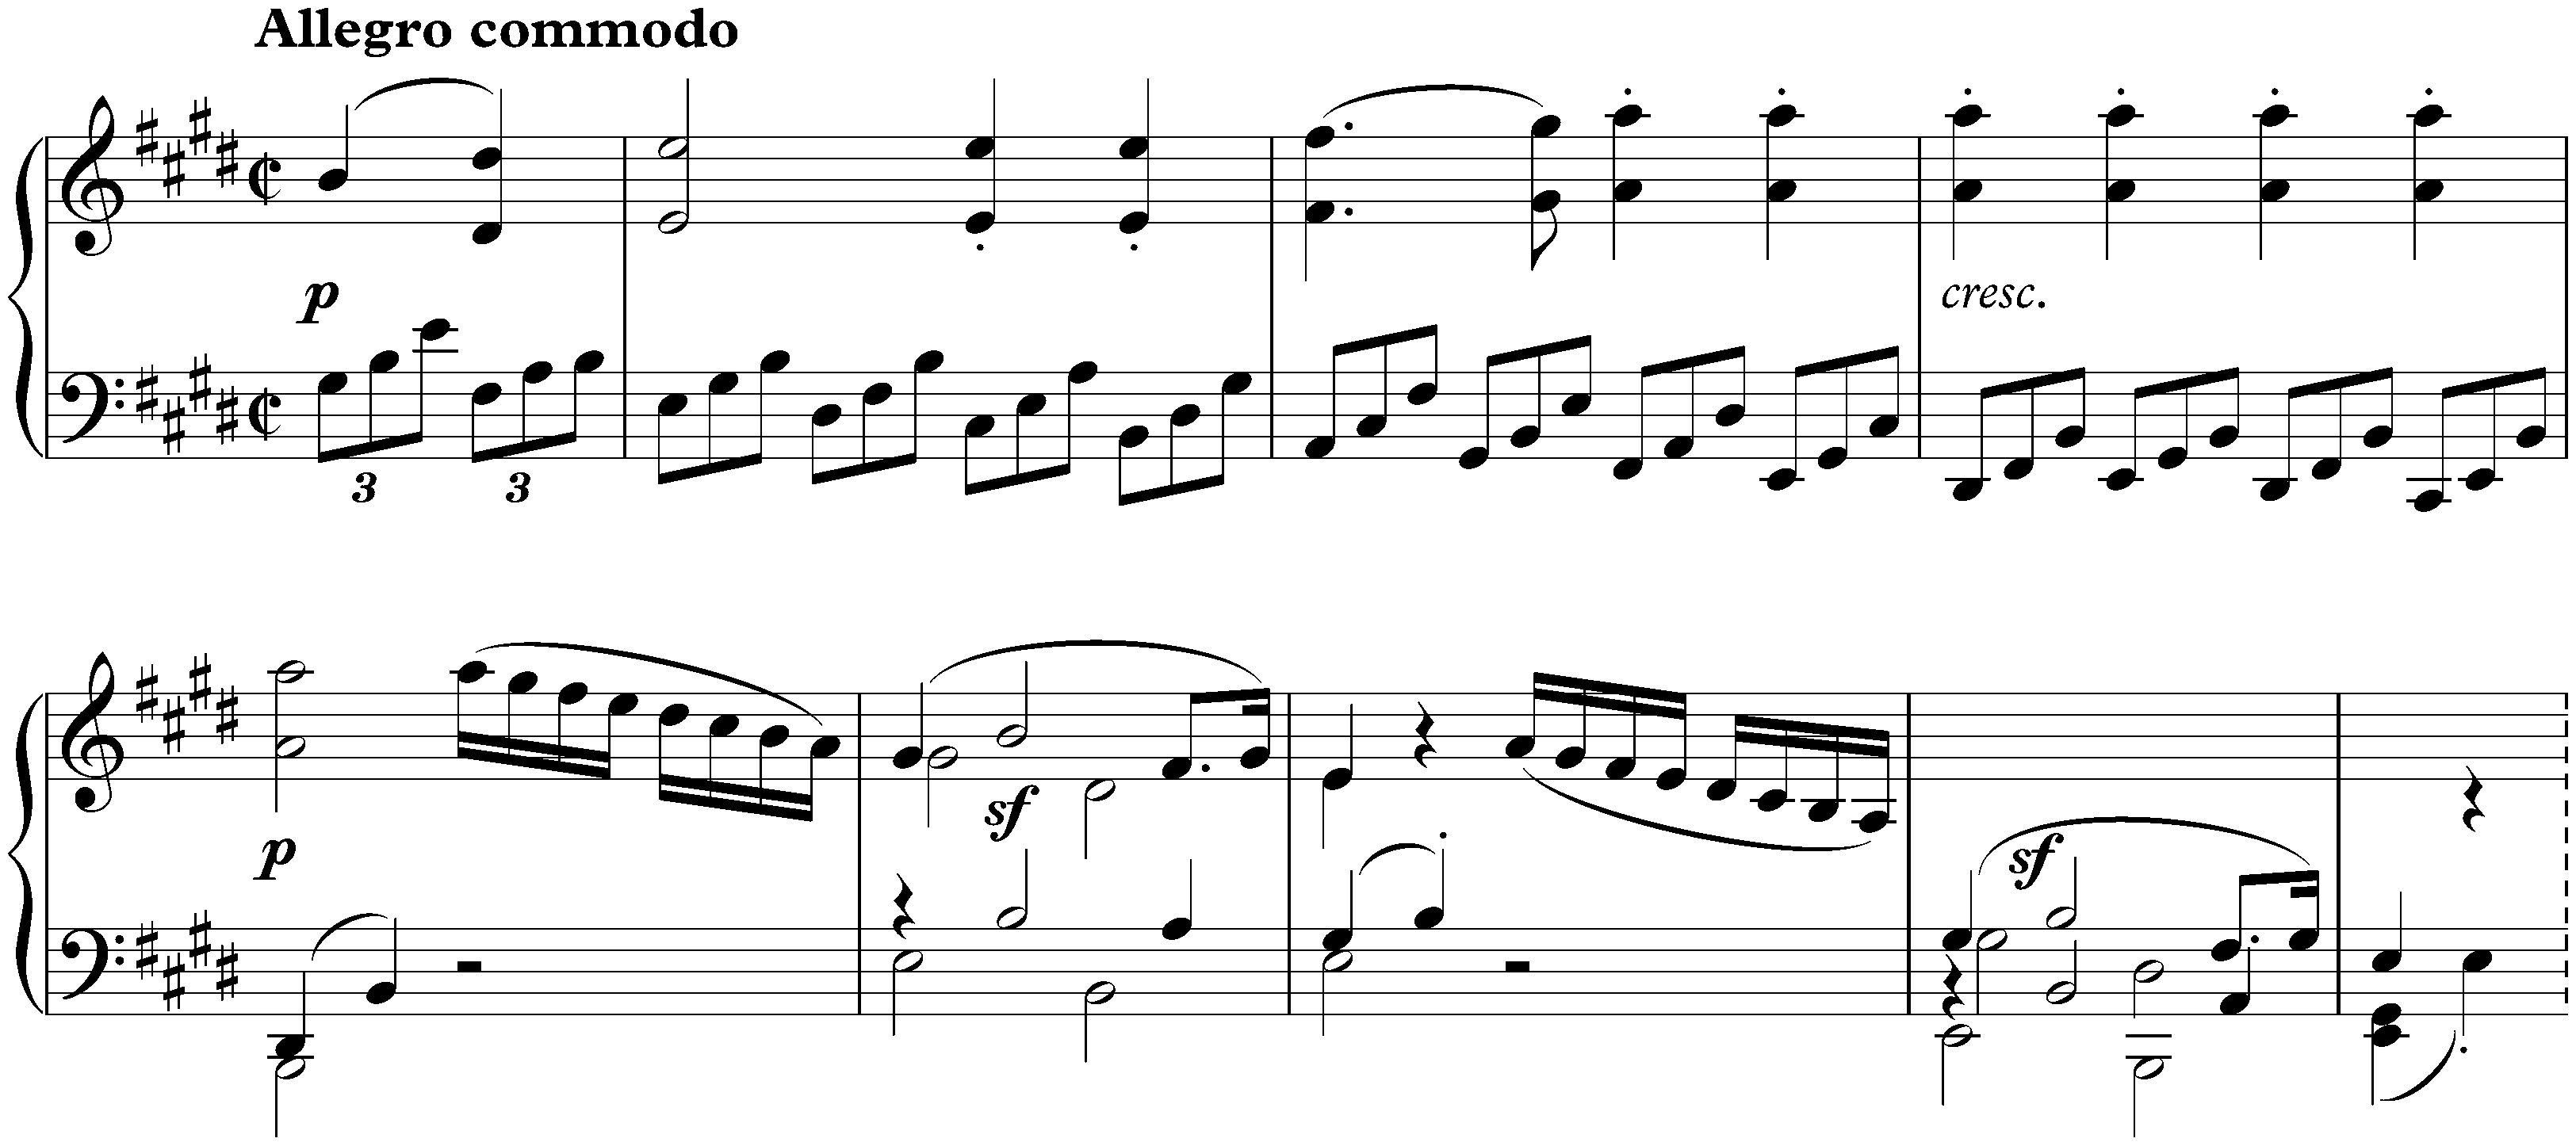 Sonata no. 9 in E major, op. 14 no. 1; 3. Rondo: Allegro commodo